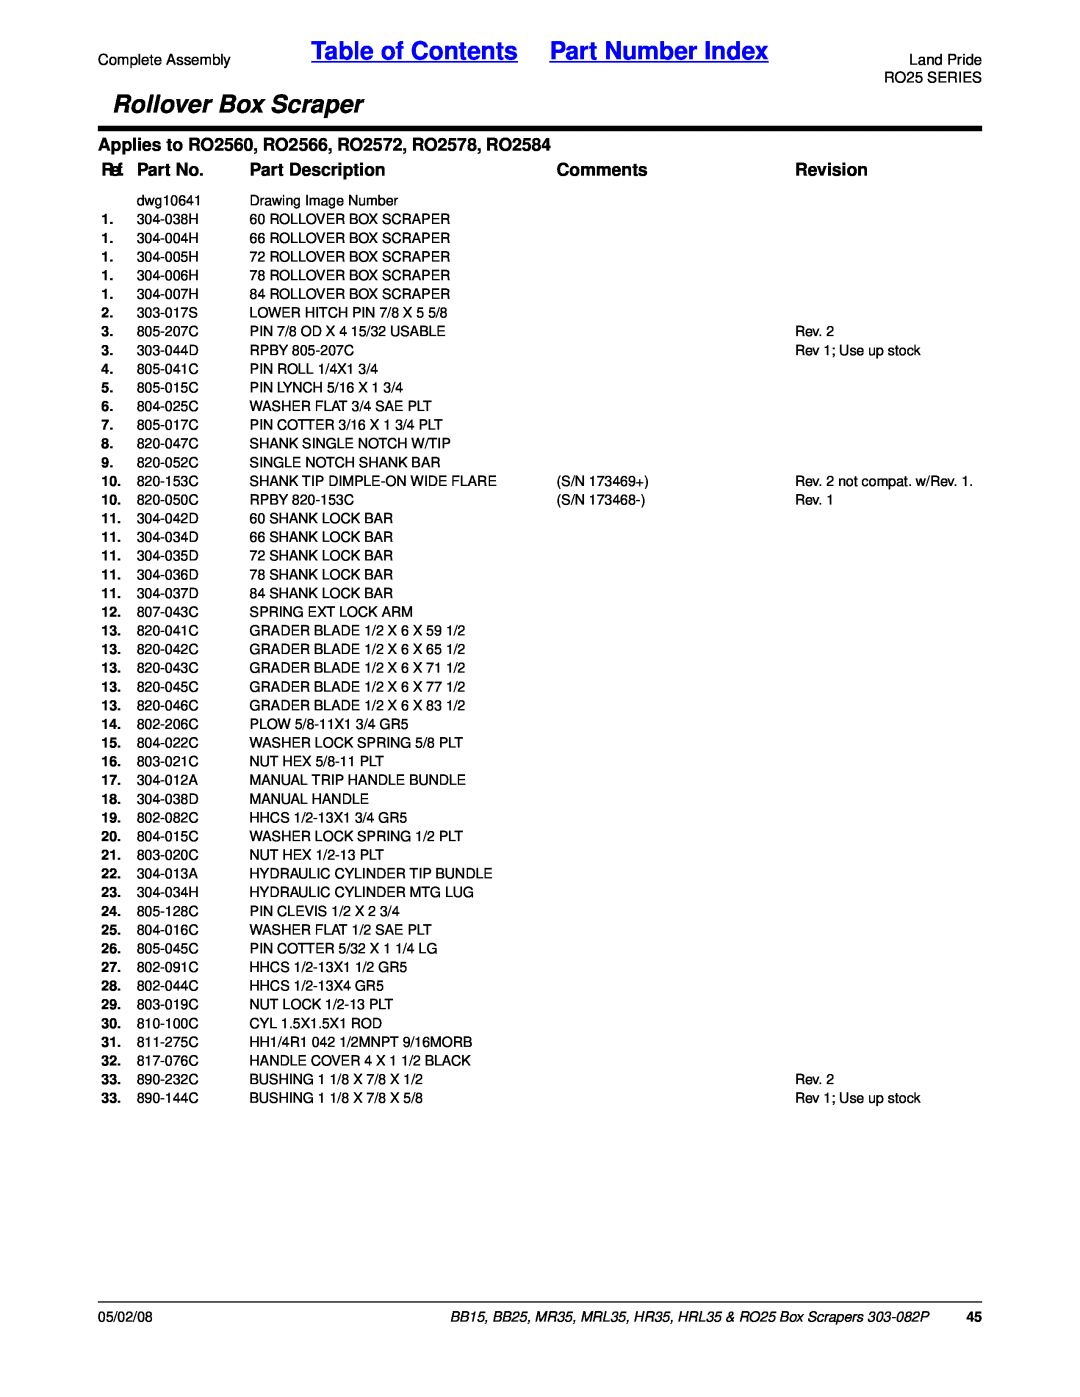 Land Pride MR35, MRL35 Table of Contents Part Number Index, Rollover Box Scraper, Ref. Part No, Part Description, Comments 